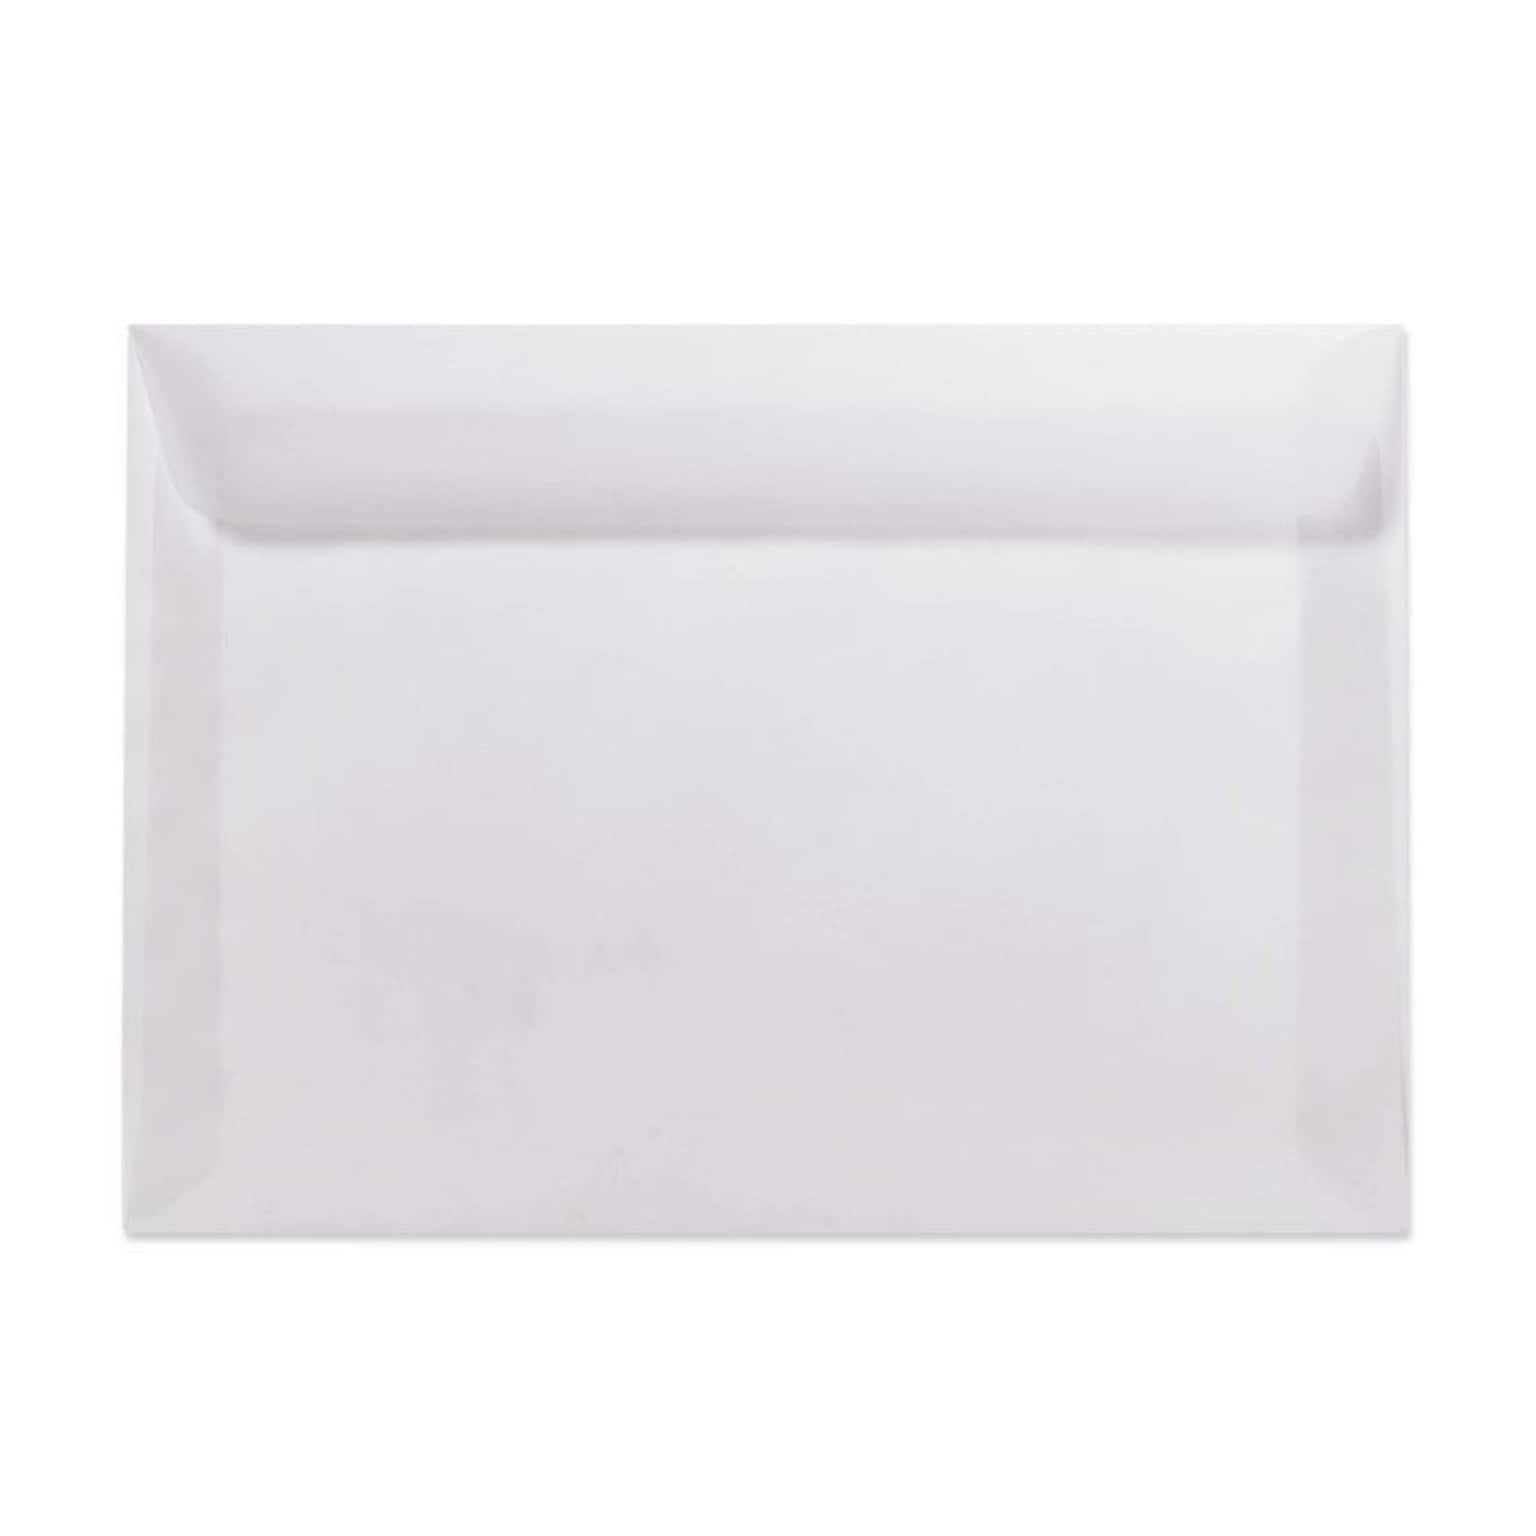 LUX 10 x 13 Booklet Envelopes, Clear Translucent, 50/Pack